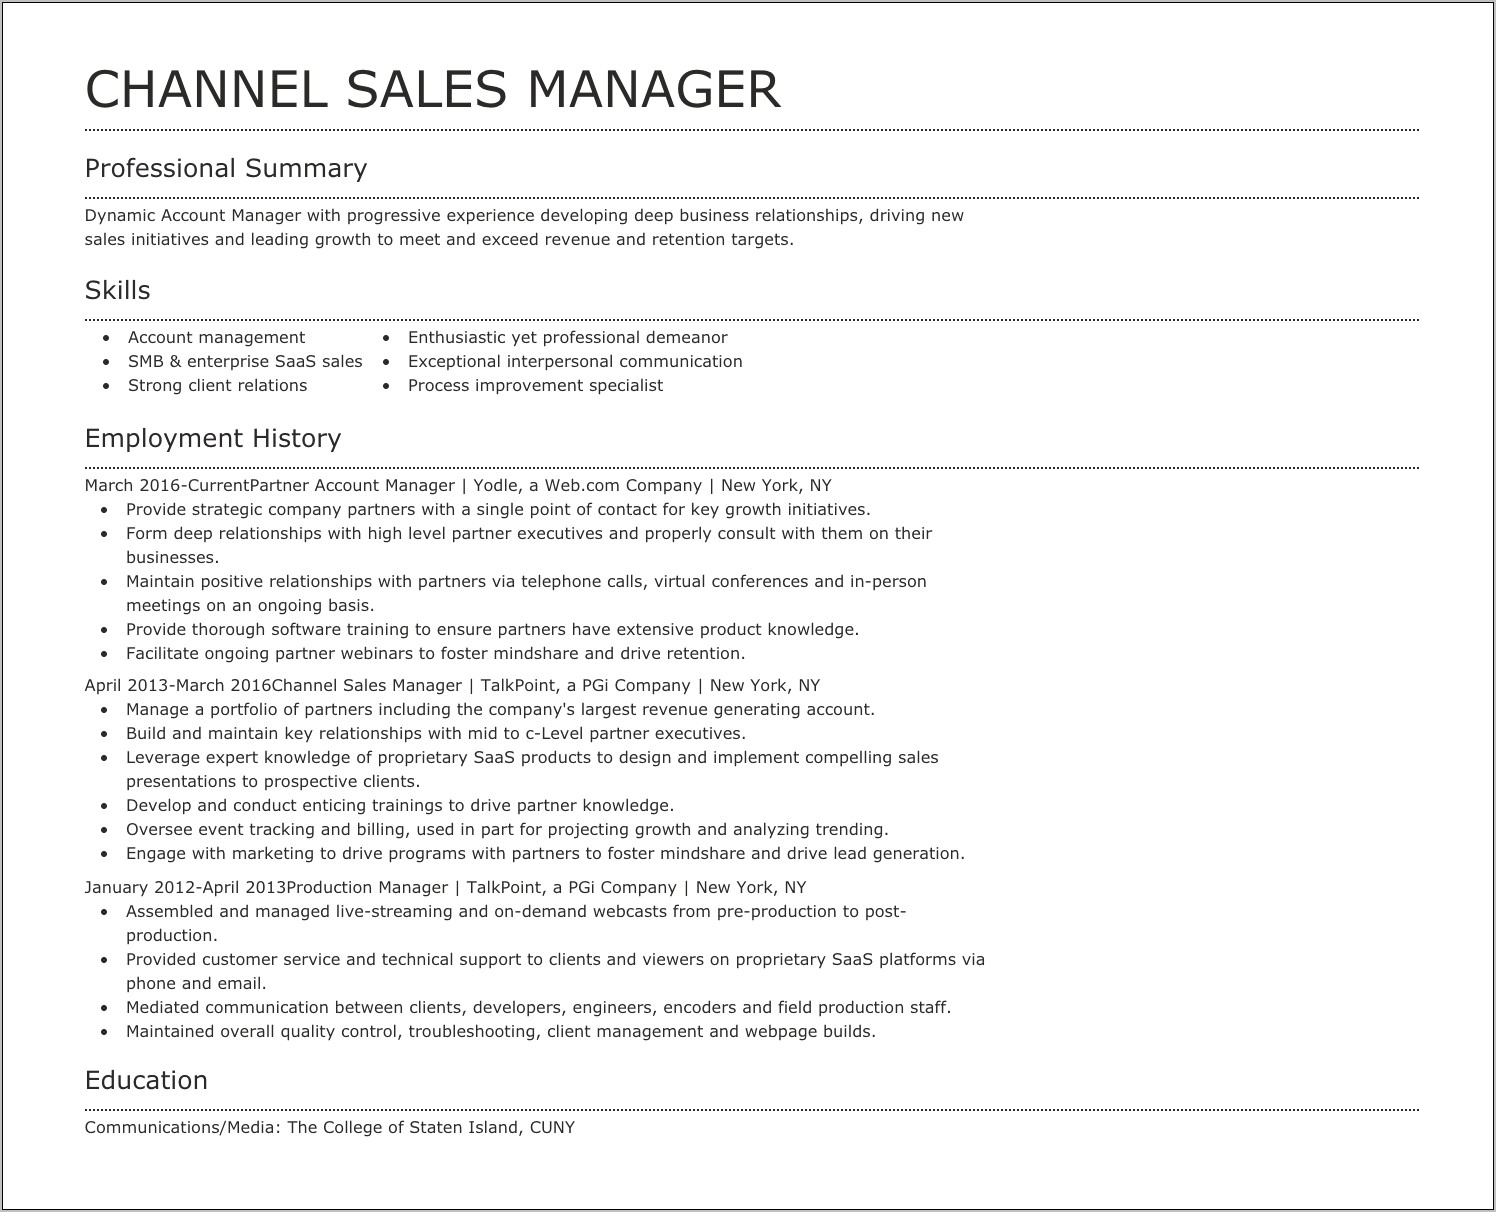 Marketin And Sales Coordinator Professional Profile Resume Summary